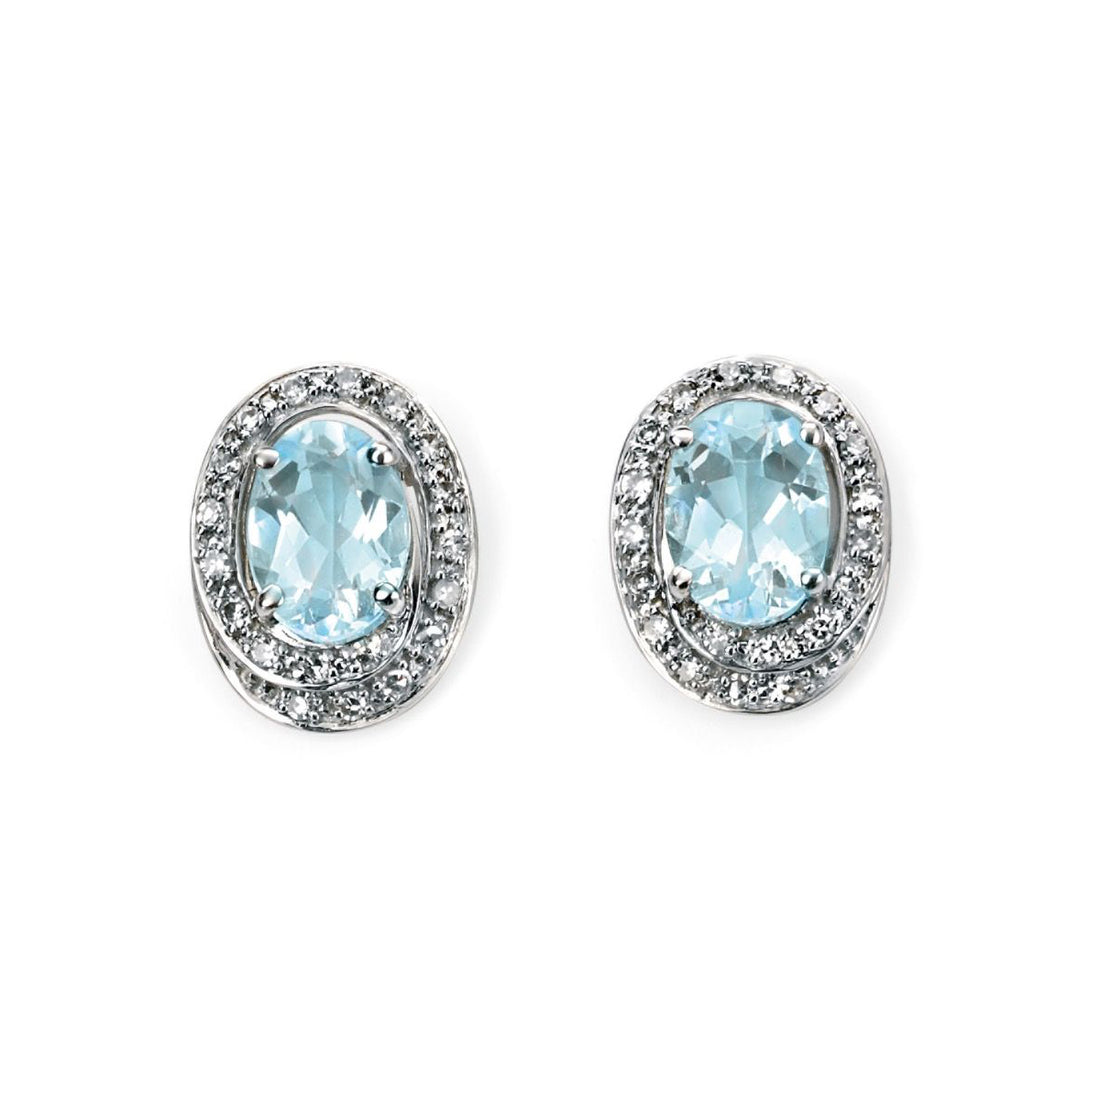 Oval Aquamarine Earrings with Diamond Swirl in 9ct White Gold